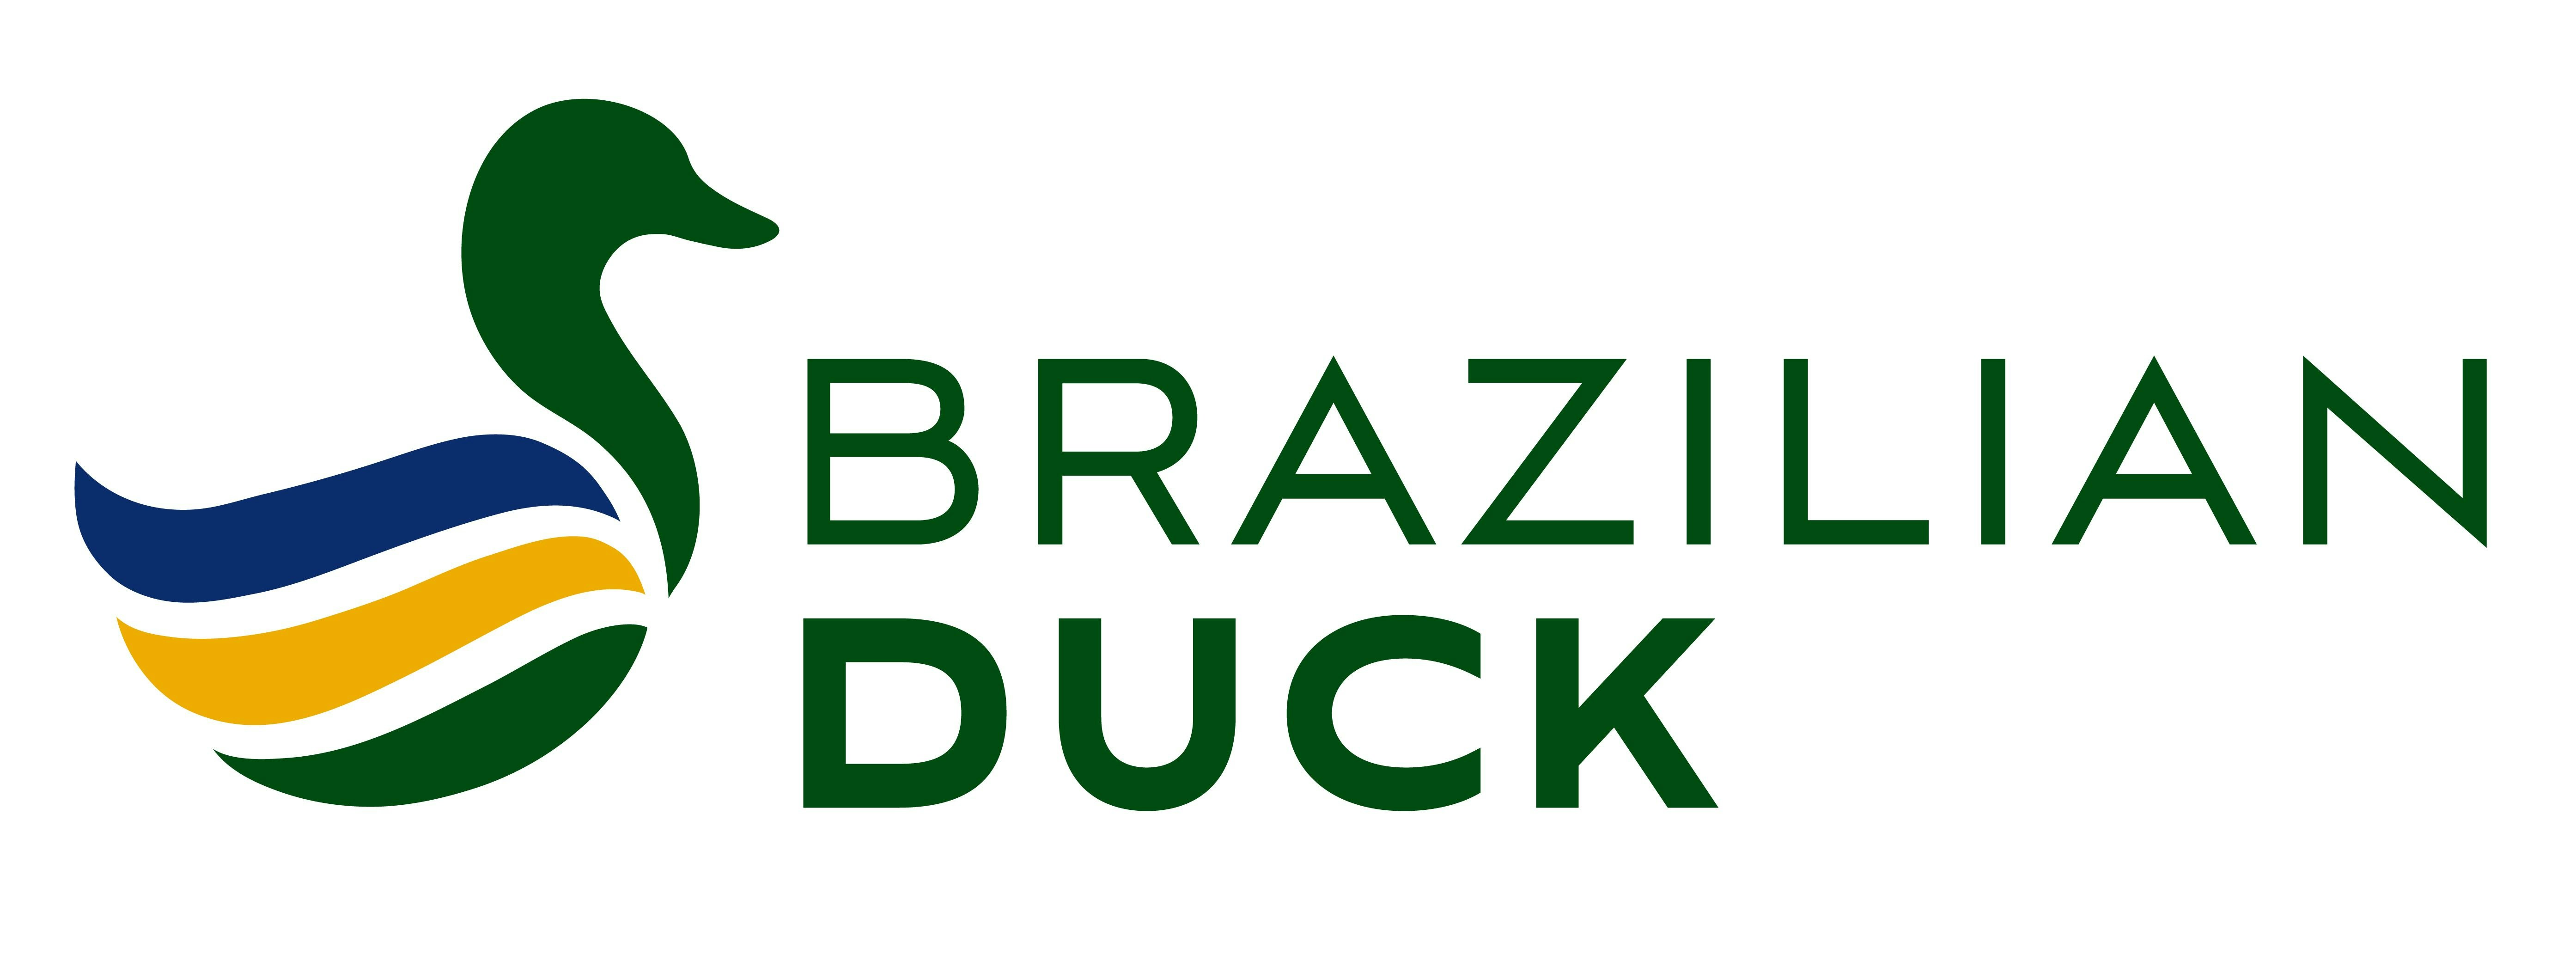 Brazilian-duck-logo.jpg